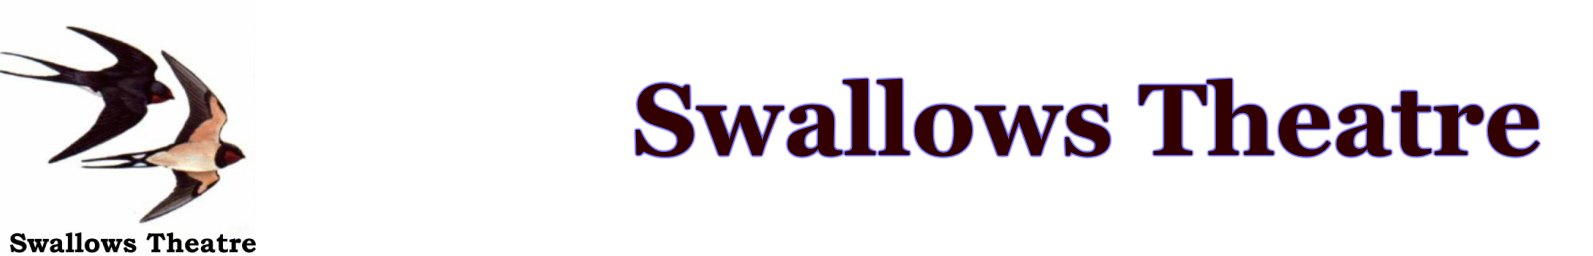 Swallows Theatre